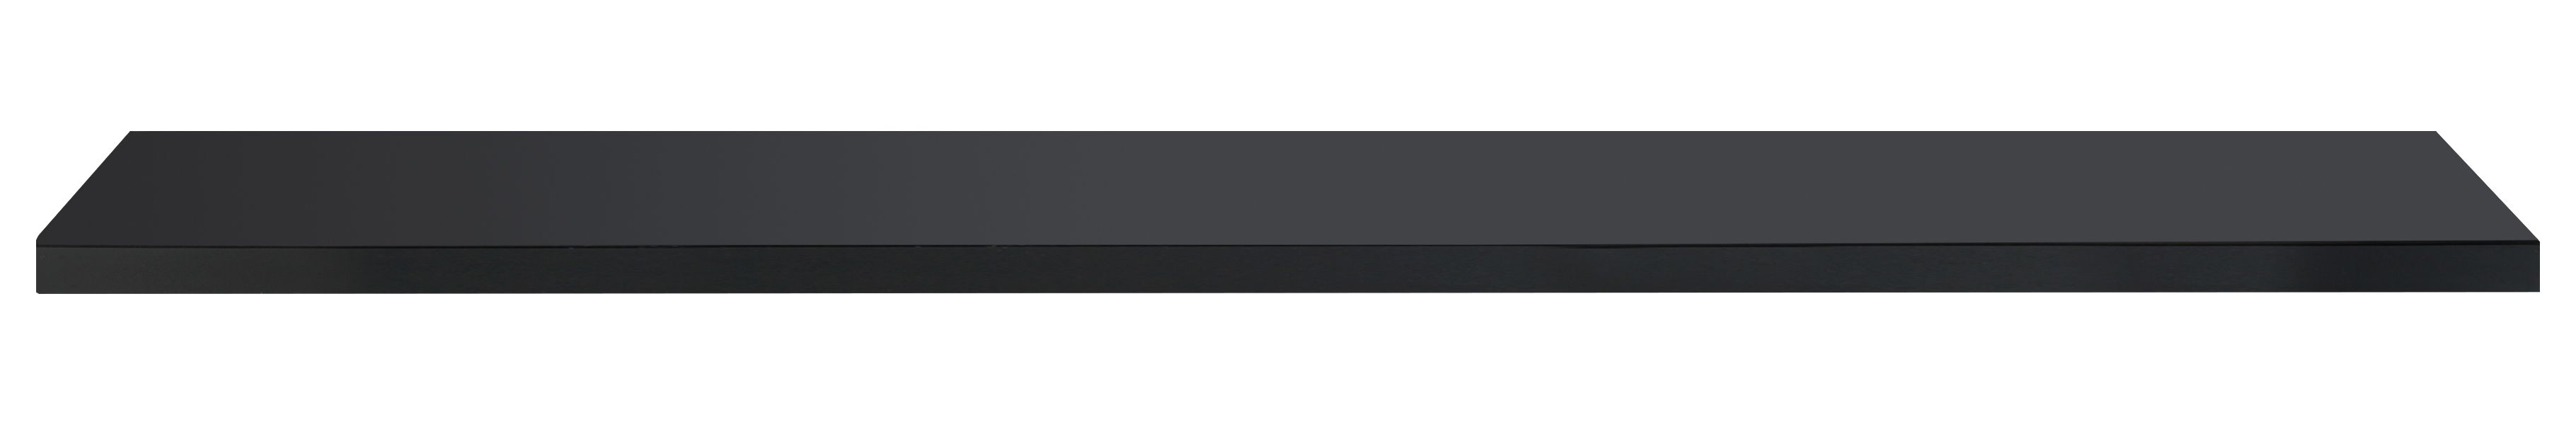 Image of Wickes Gloss Black Radiator Shelf - 18 x 150 x 1200mm